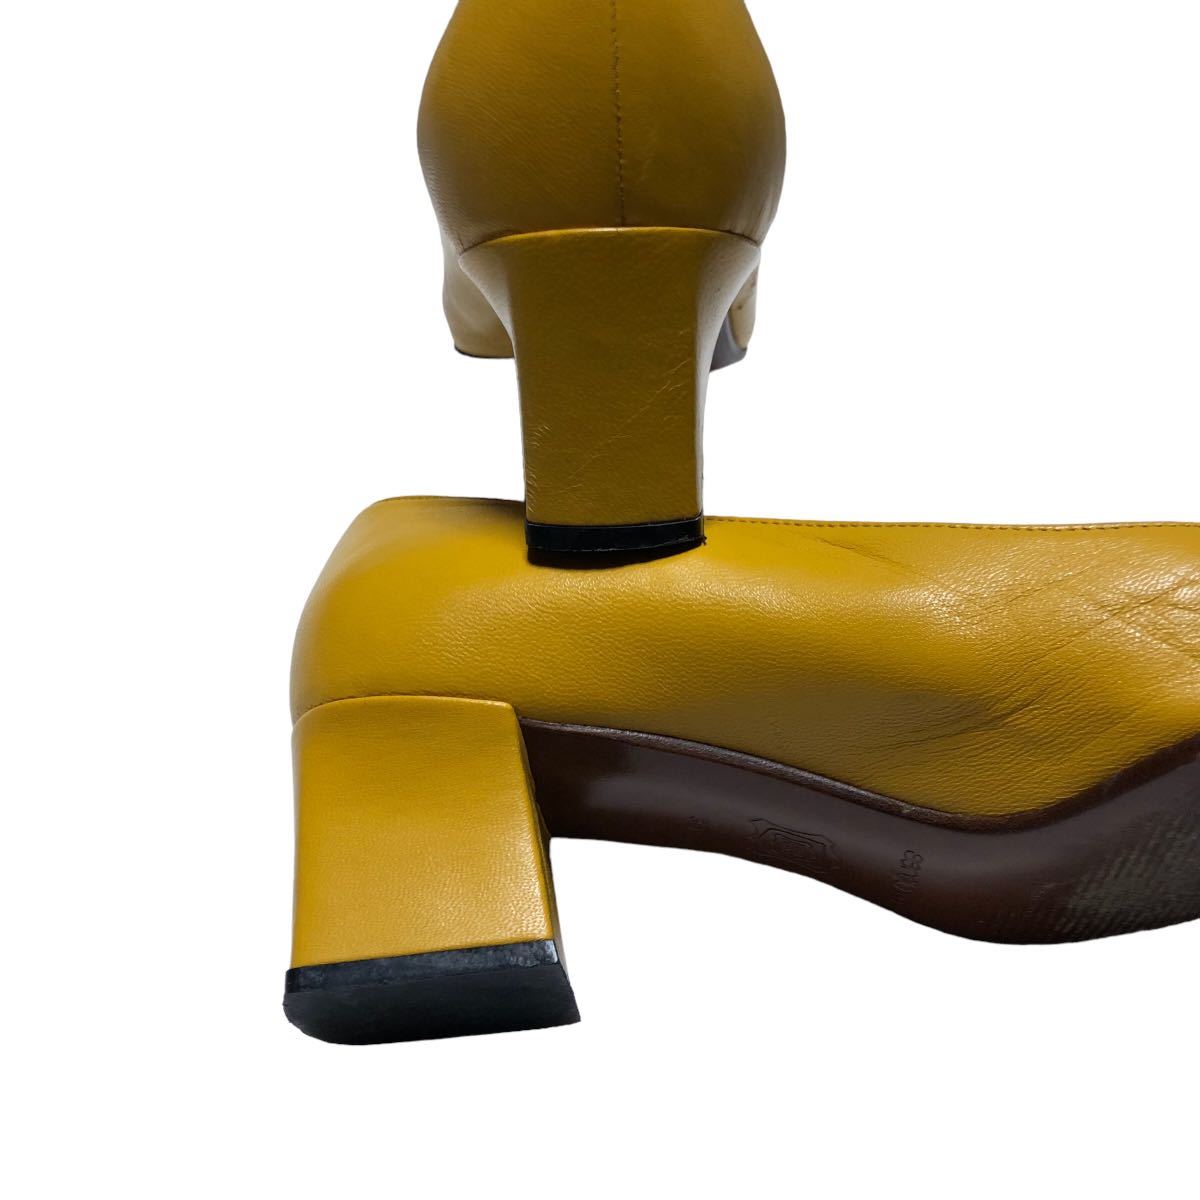 AJ269 Sergio rossi Sergio Rossi женский туфли-лодочки 35 примерно 22.5cm желтый кожа хороший Италия производства 